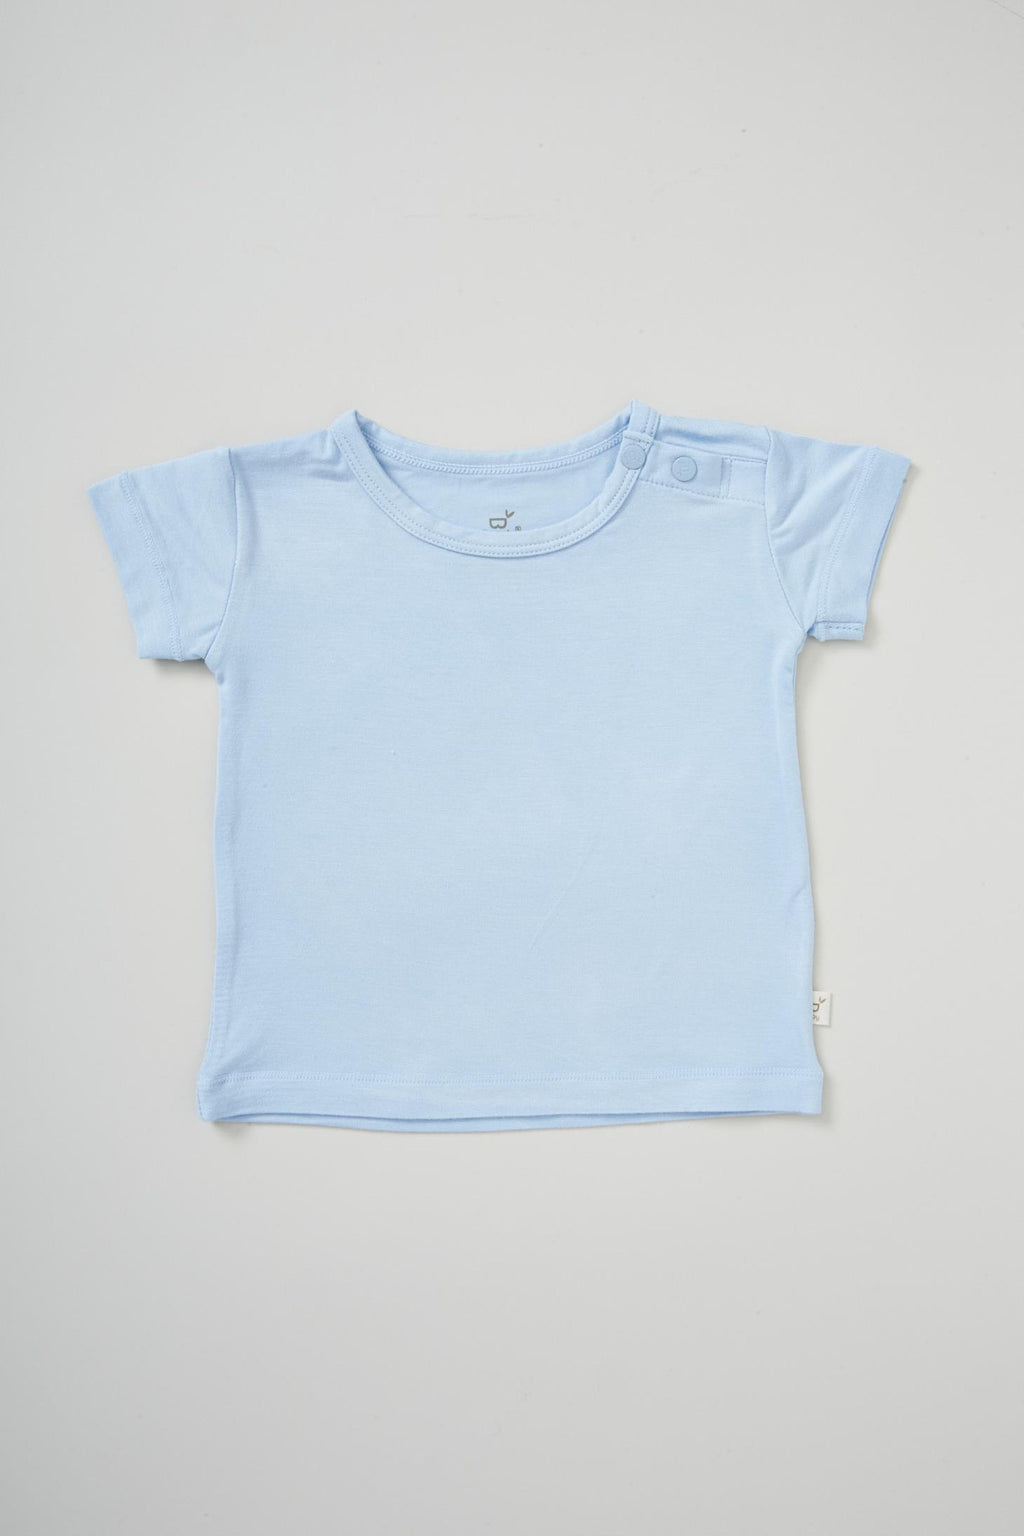 Boody Baby T-Shirt Sky 12-18mth